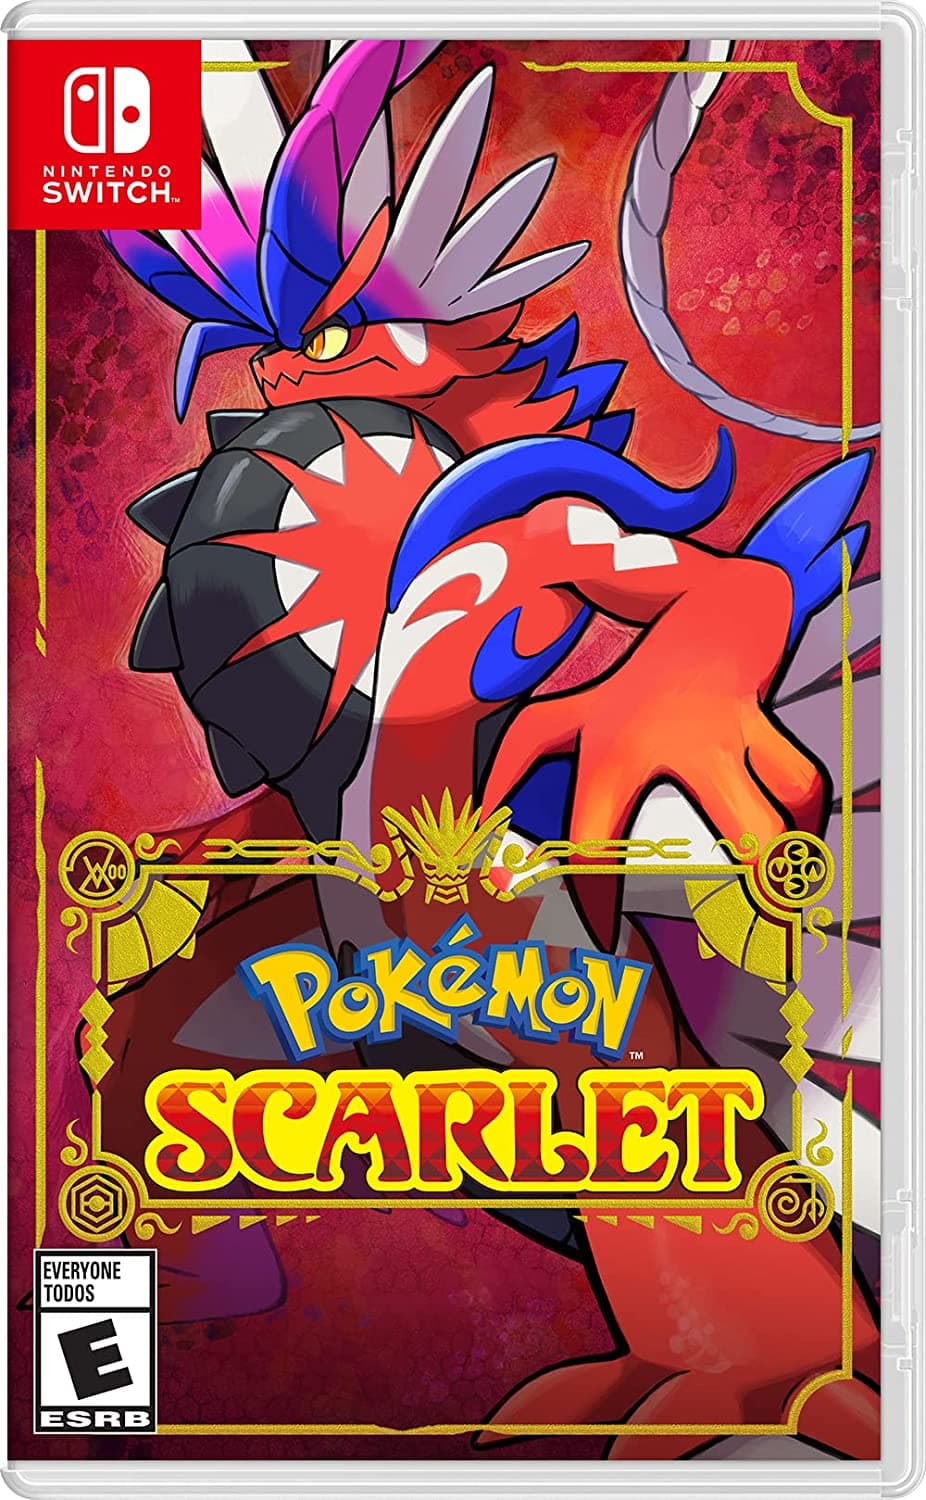 Pokémon Scarlet Nintendo Switch album artwork.